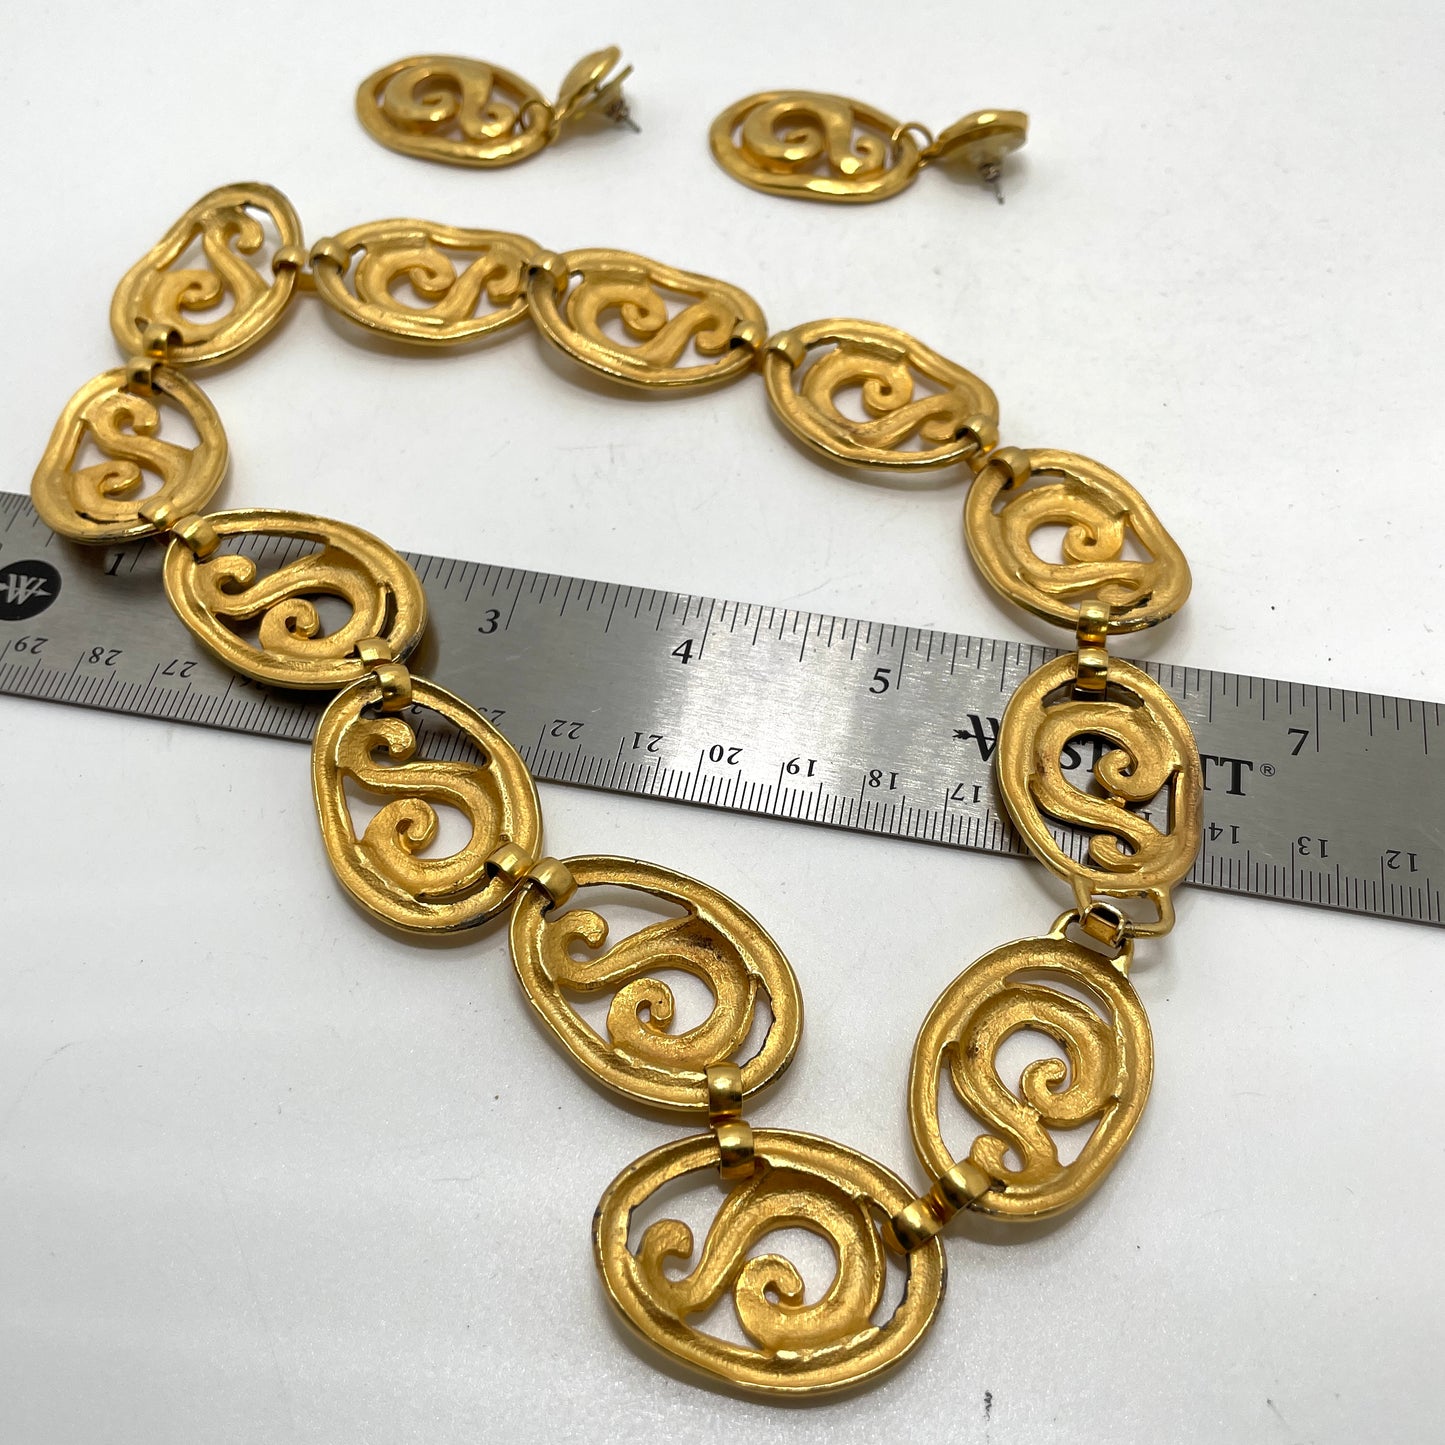 Vintage Necklace & Earring Set